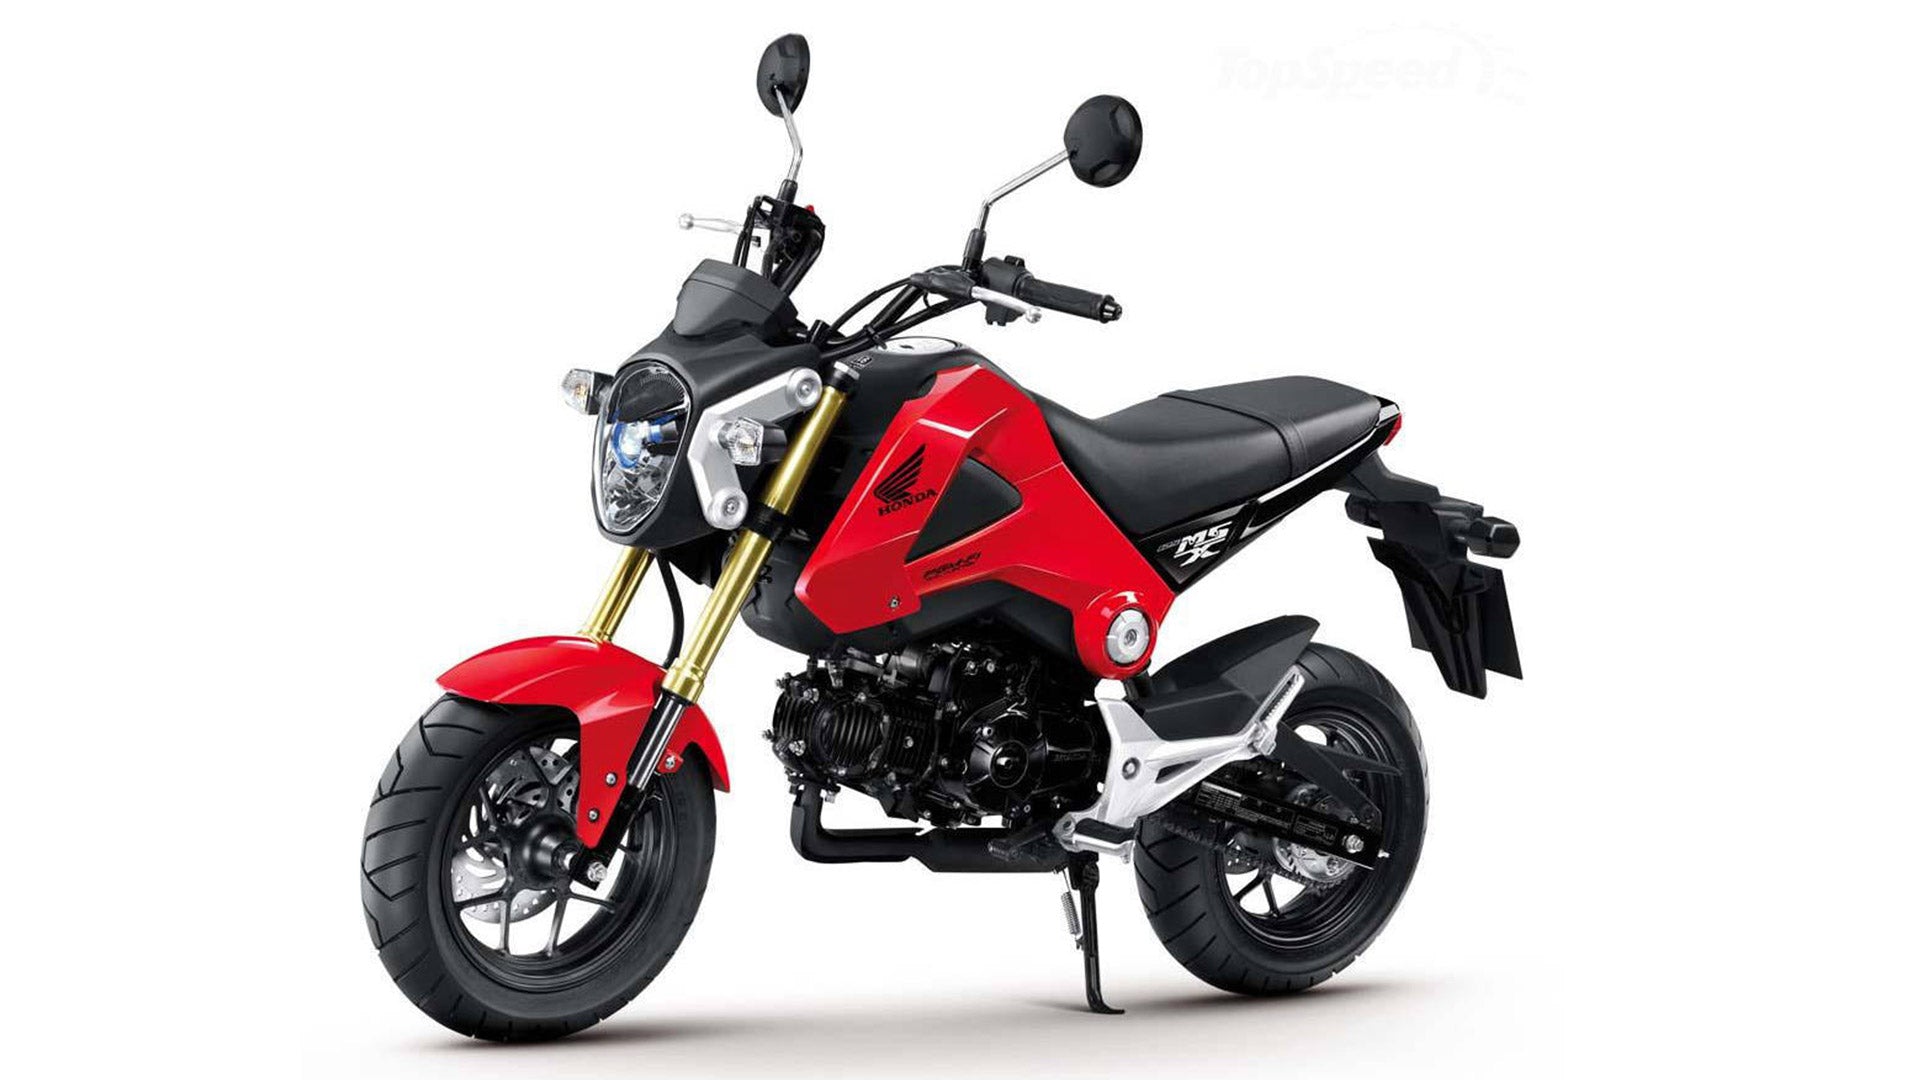 Honda Grom Msx 125 cc